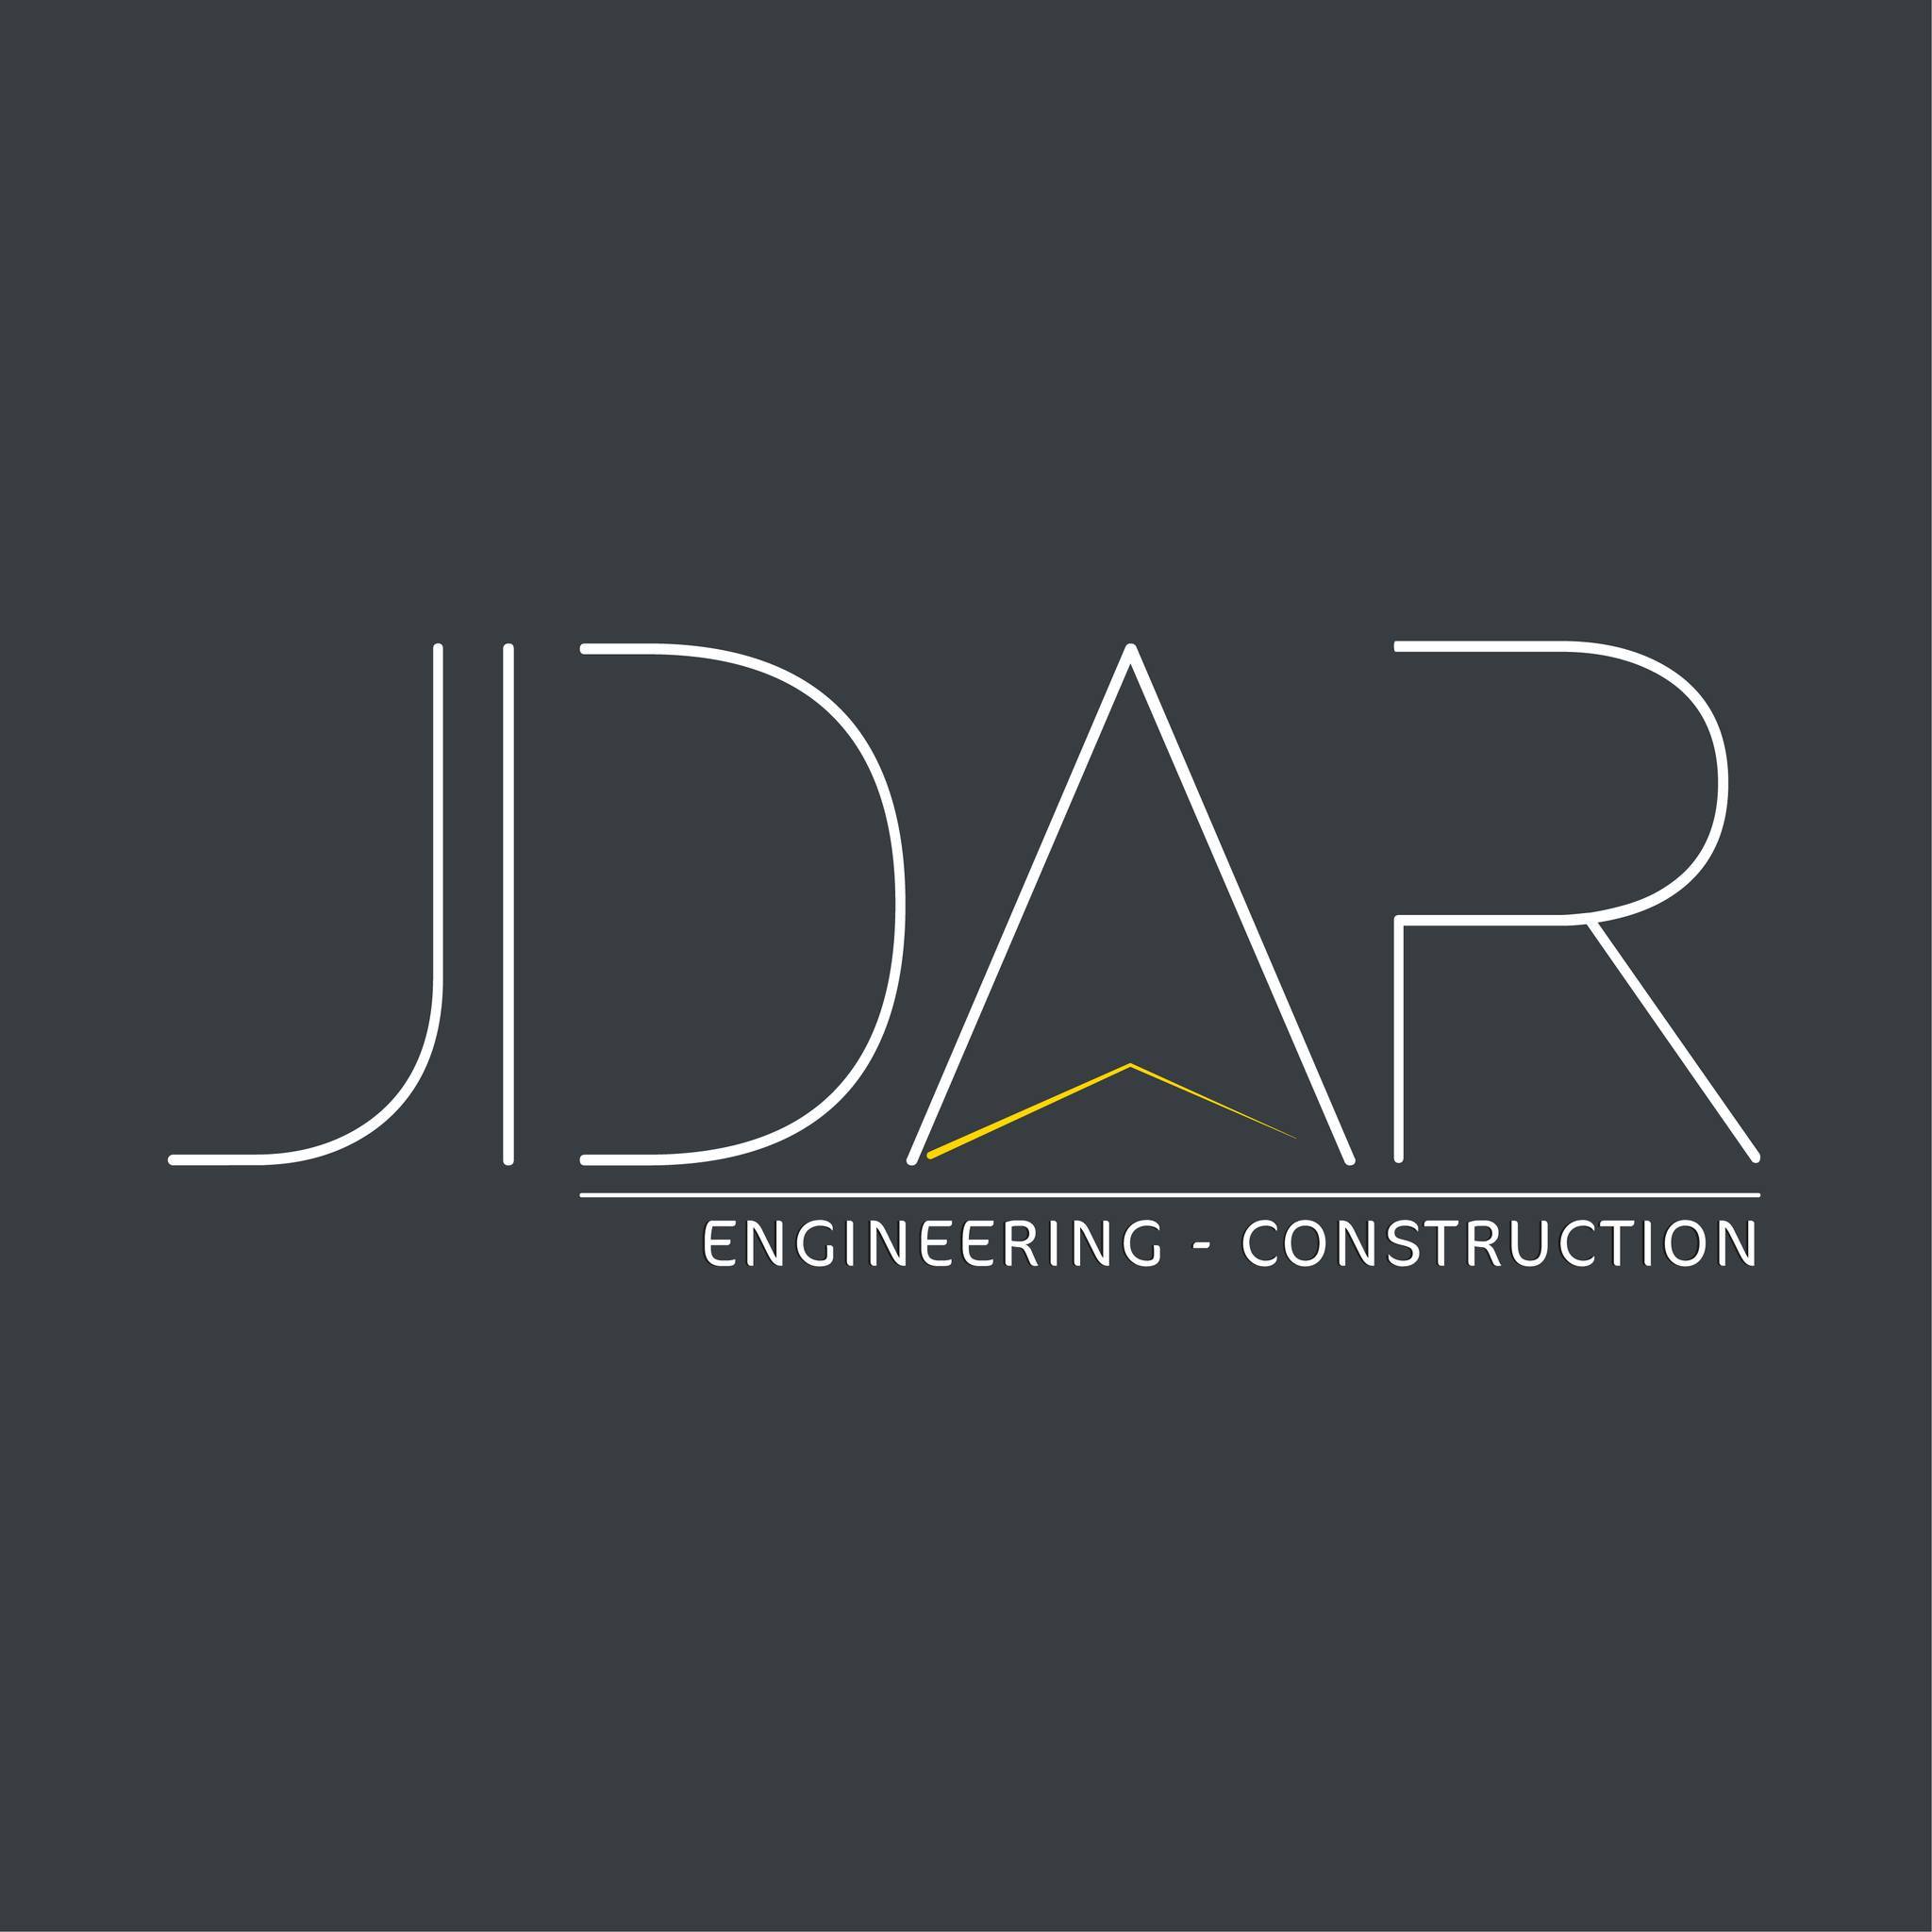 Jidar company